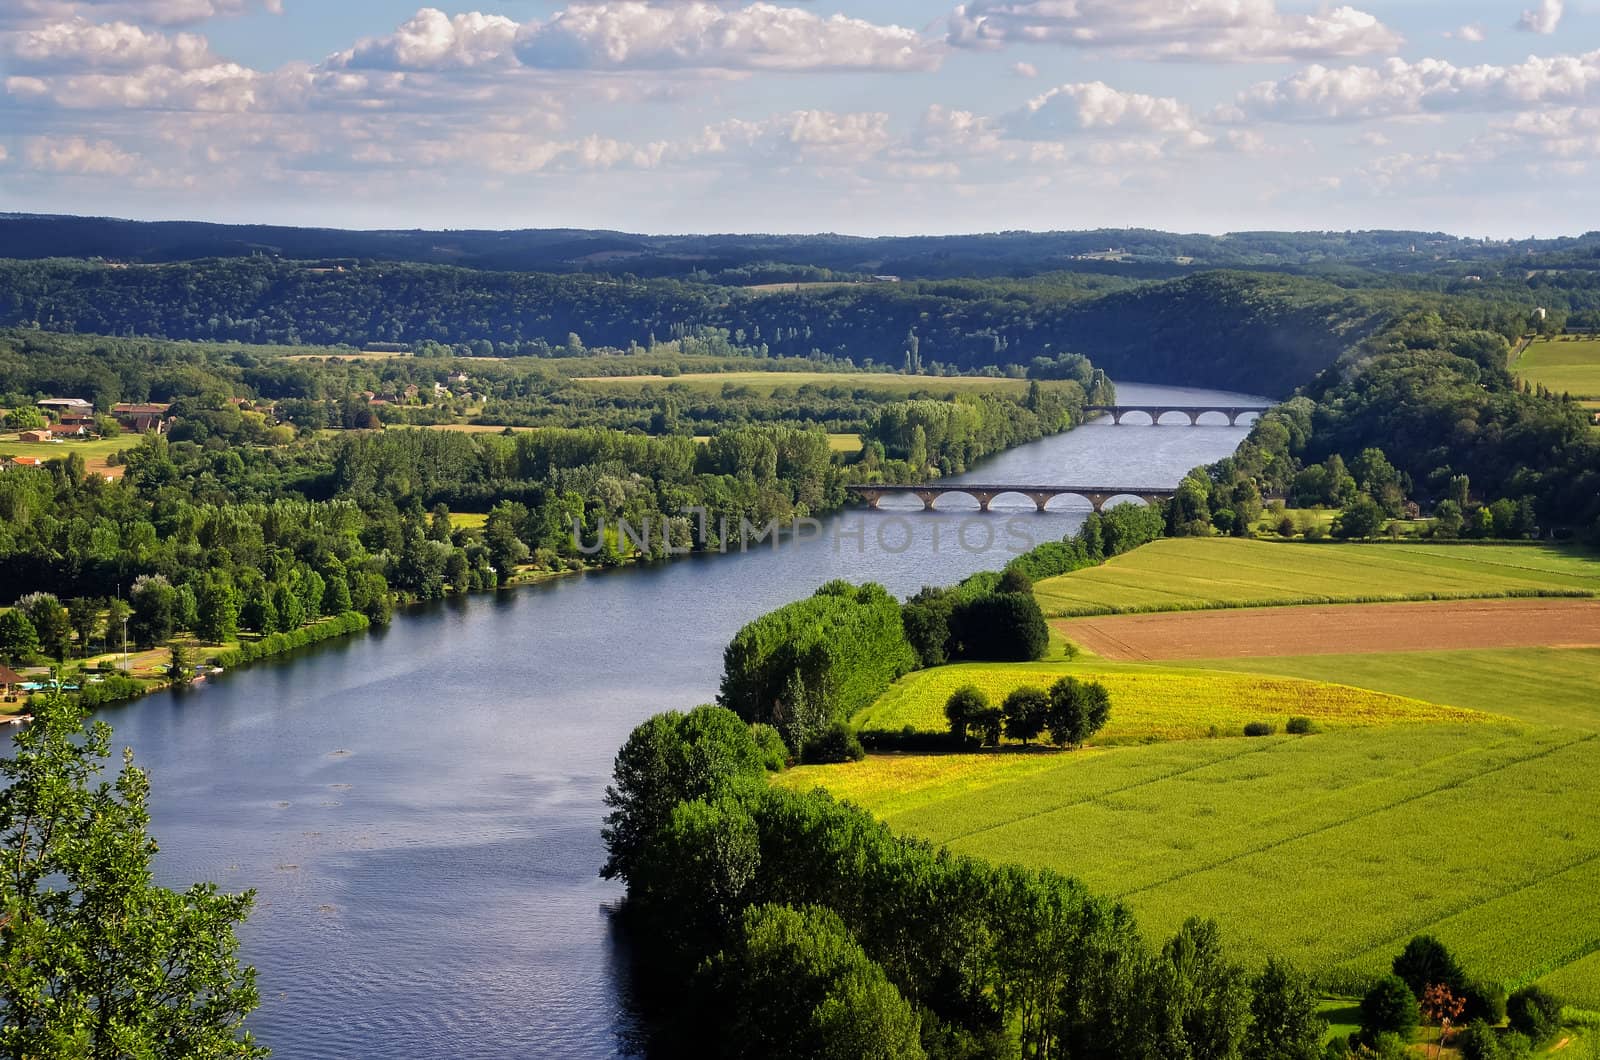 Dordogne river, Cingle de Tremolat point, France by martinm303